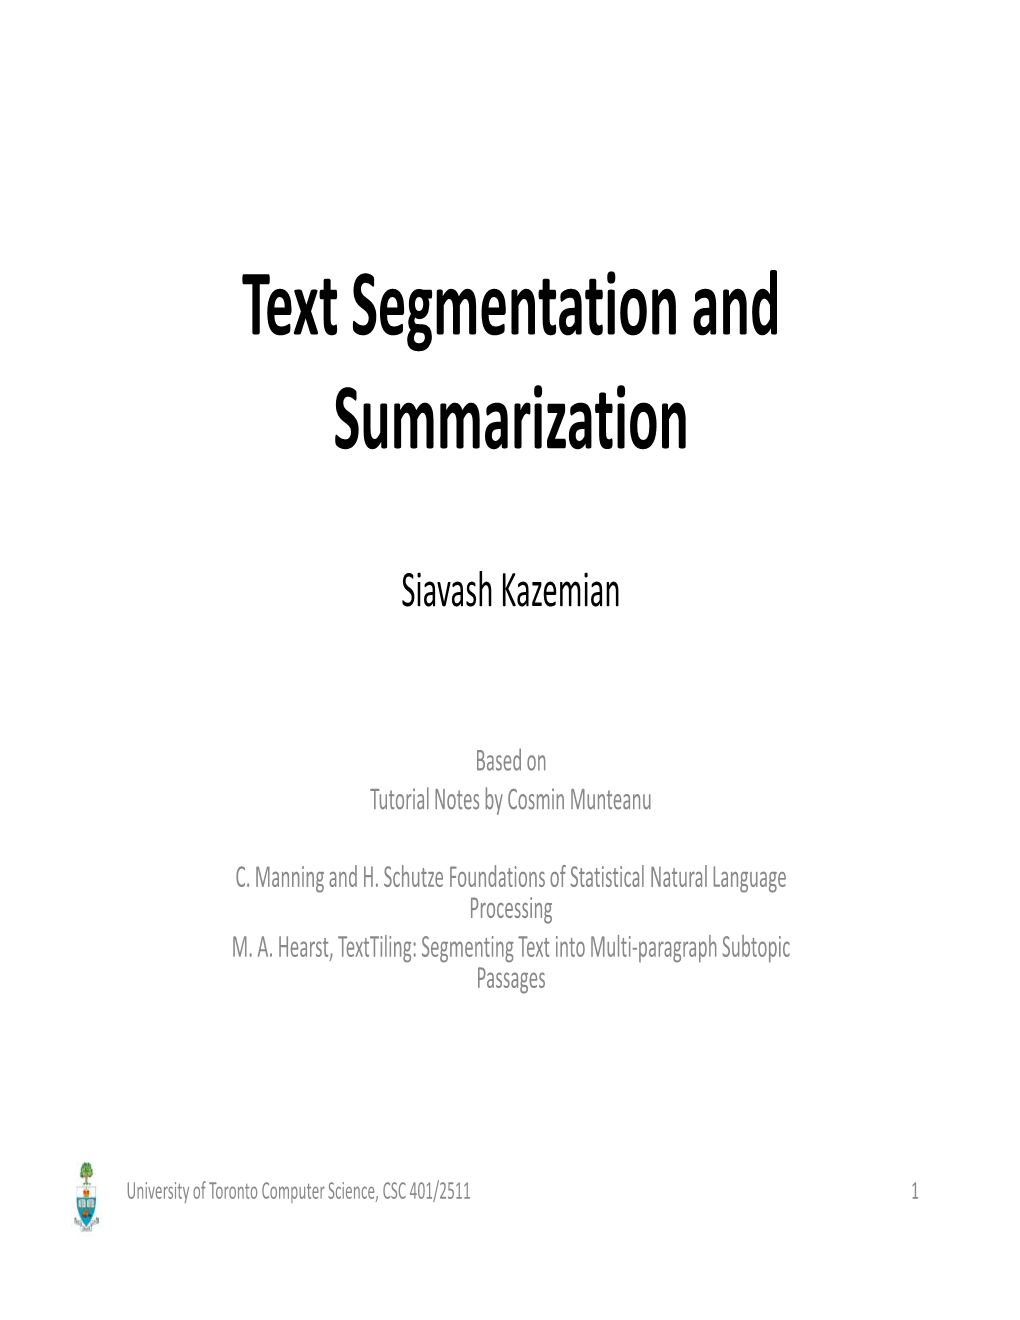 Text Segmentation and Summarization